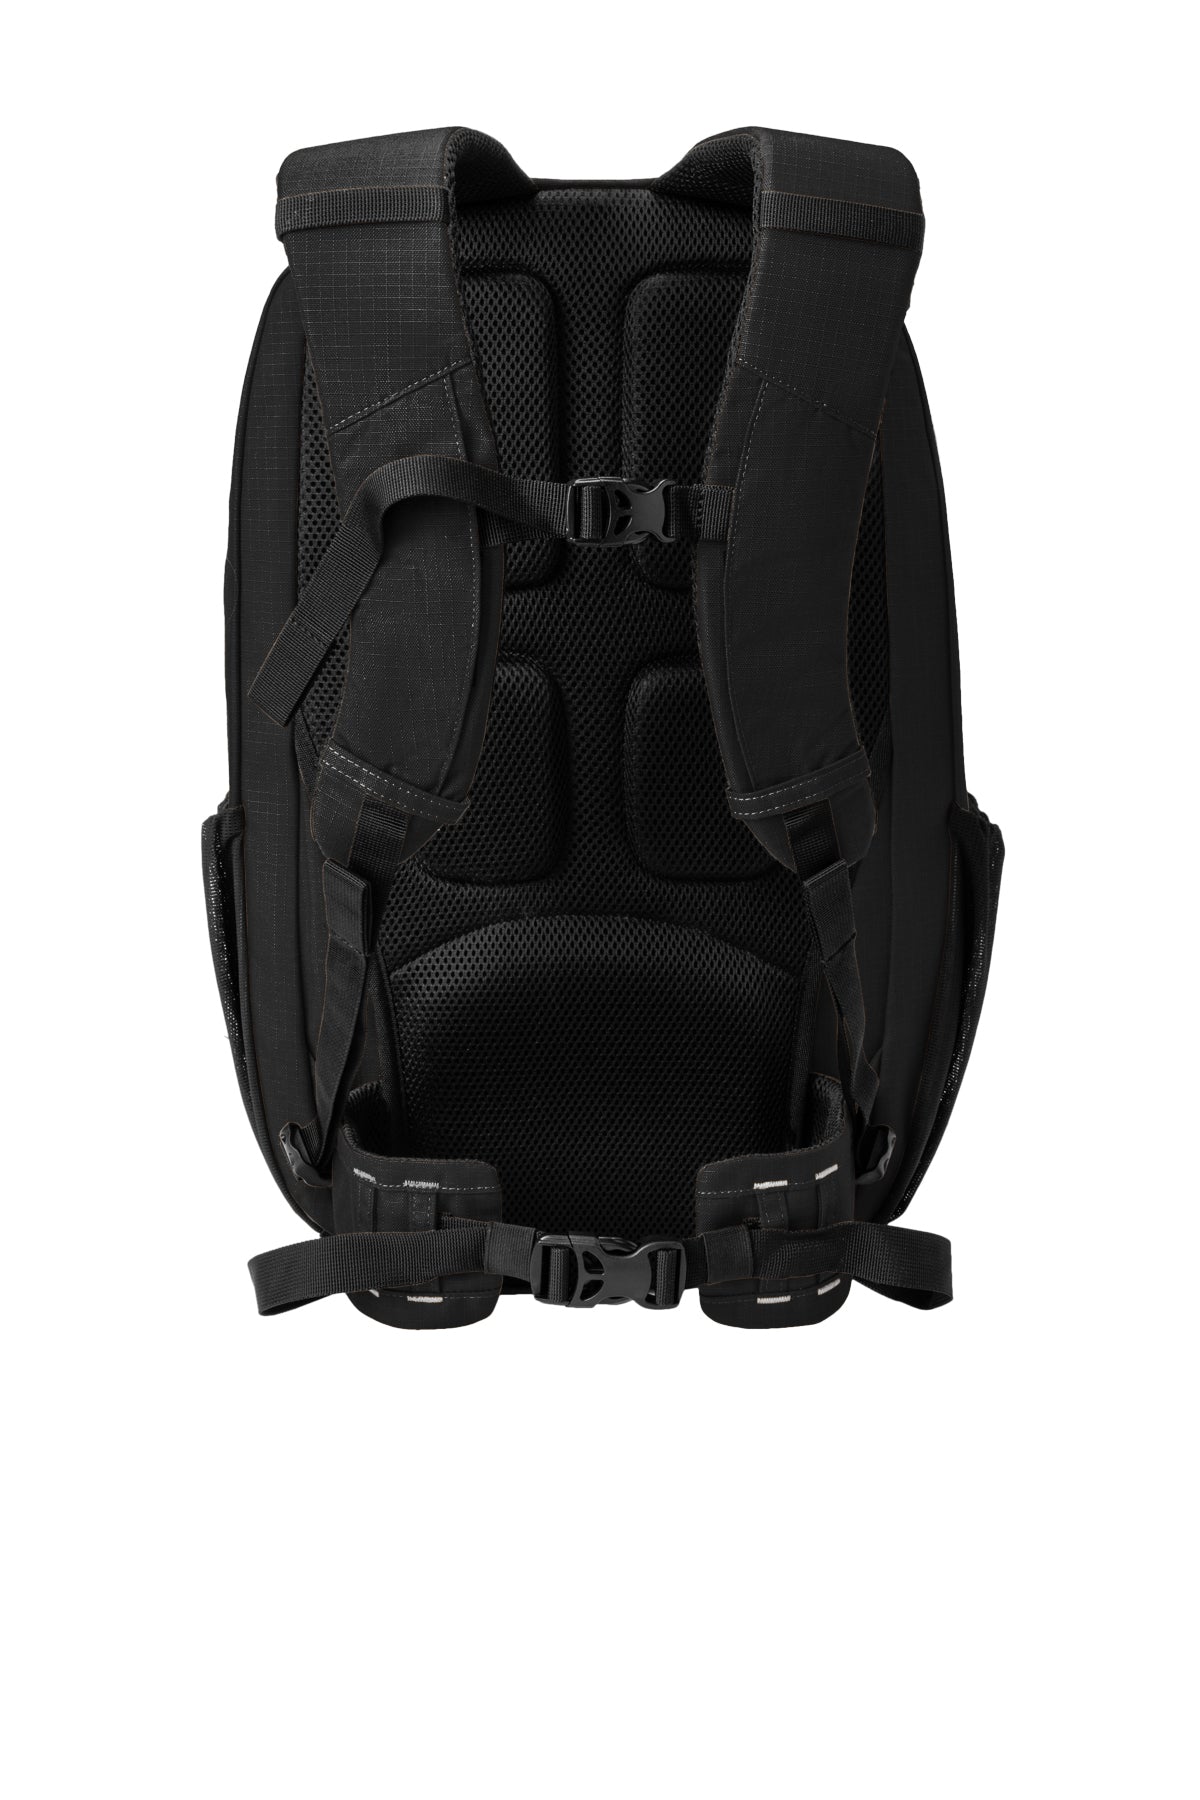 Carhartt 25L Ripstop Customized Backpacks, Black